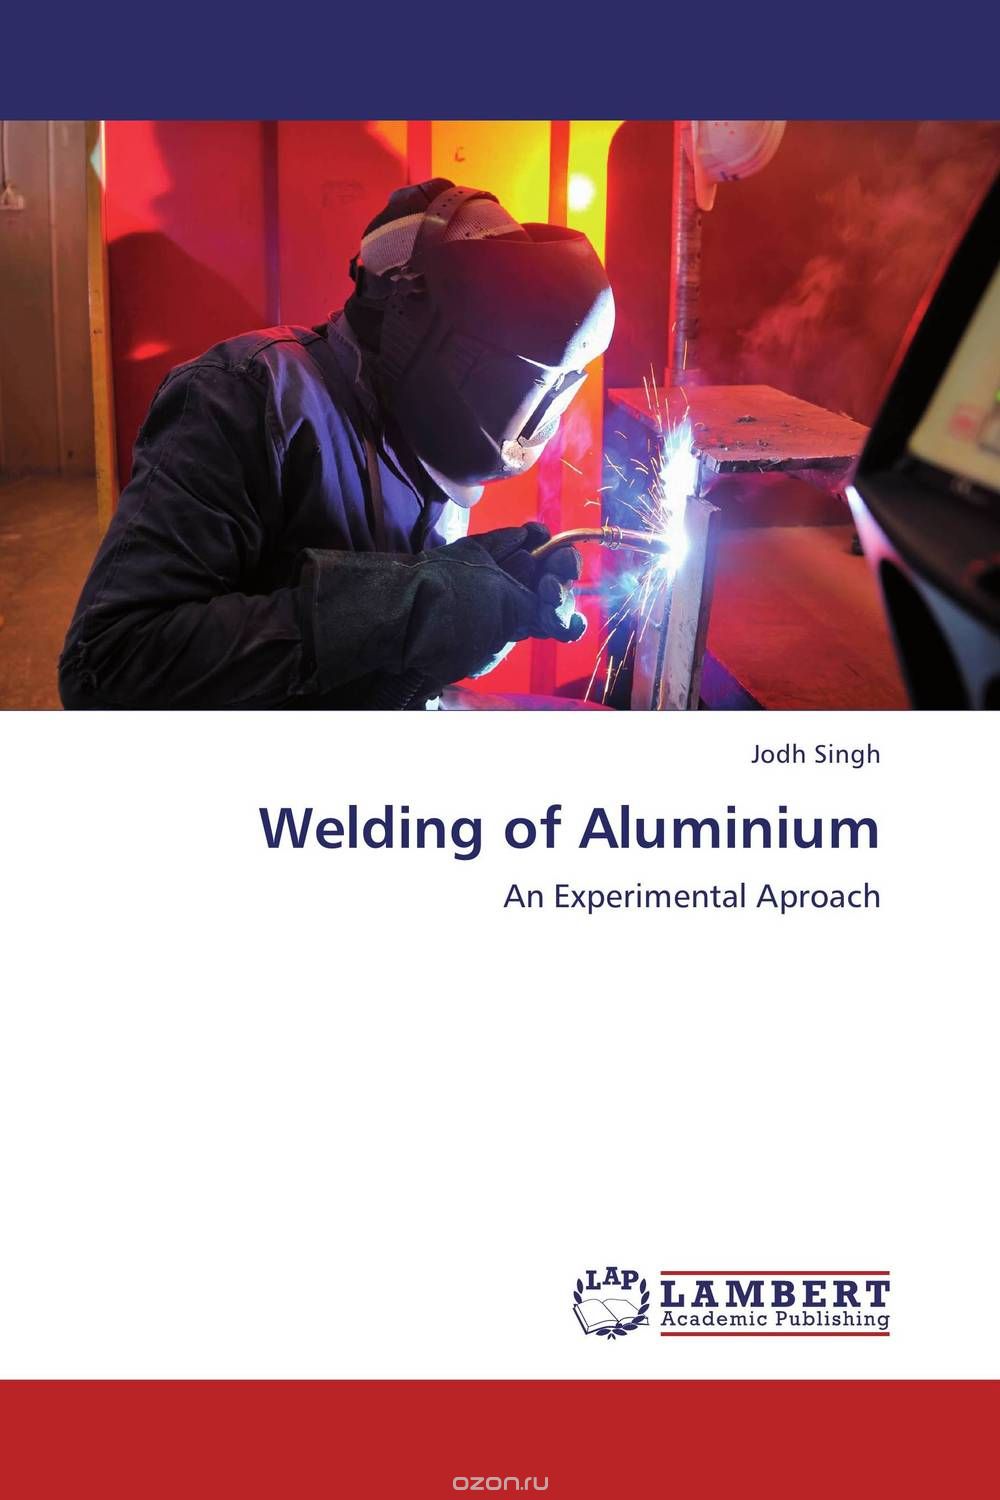 Скачать книгу "Welding of Aluminium"